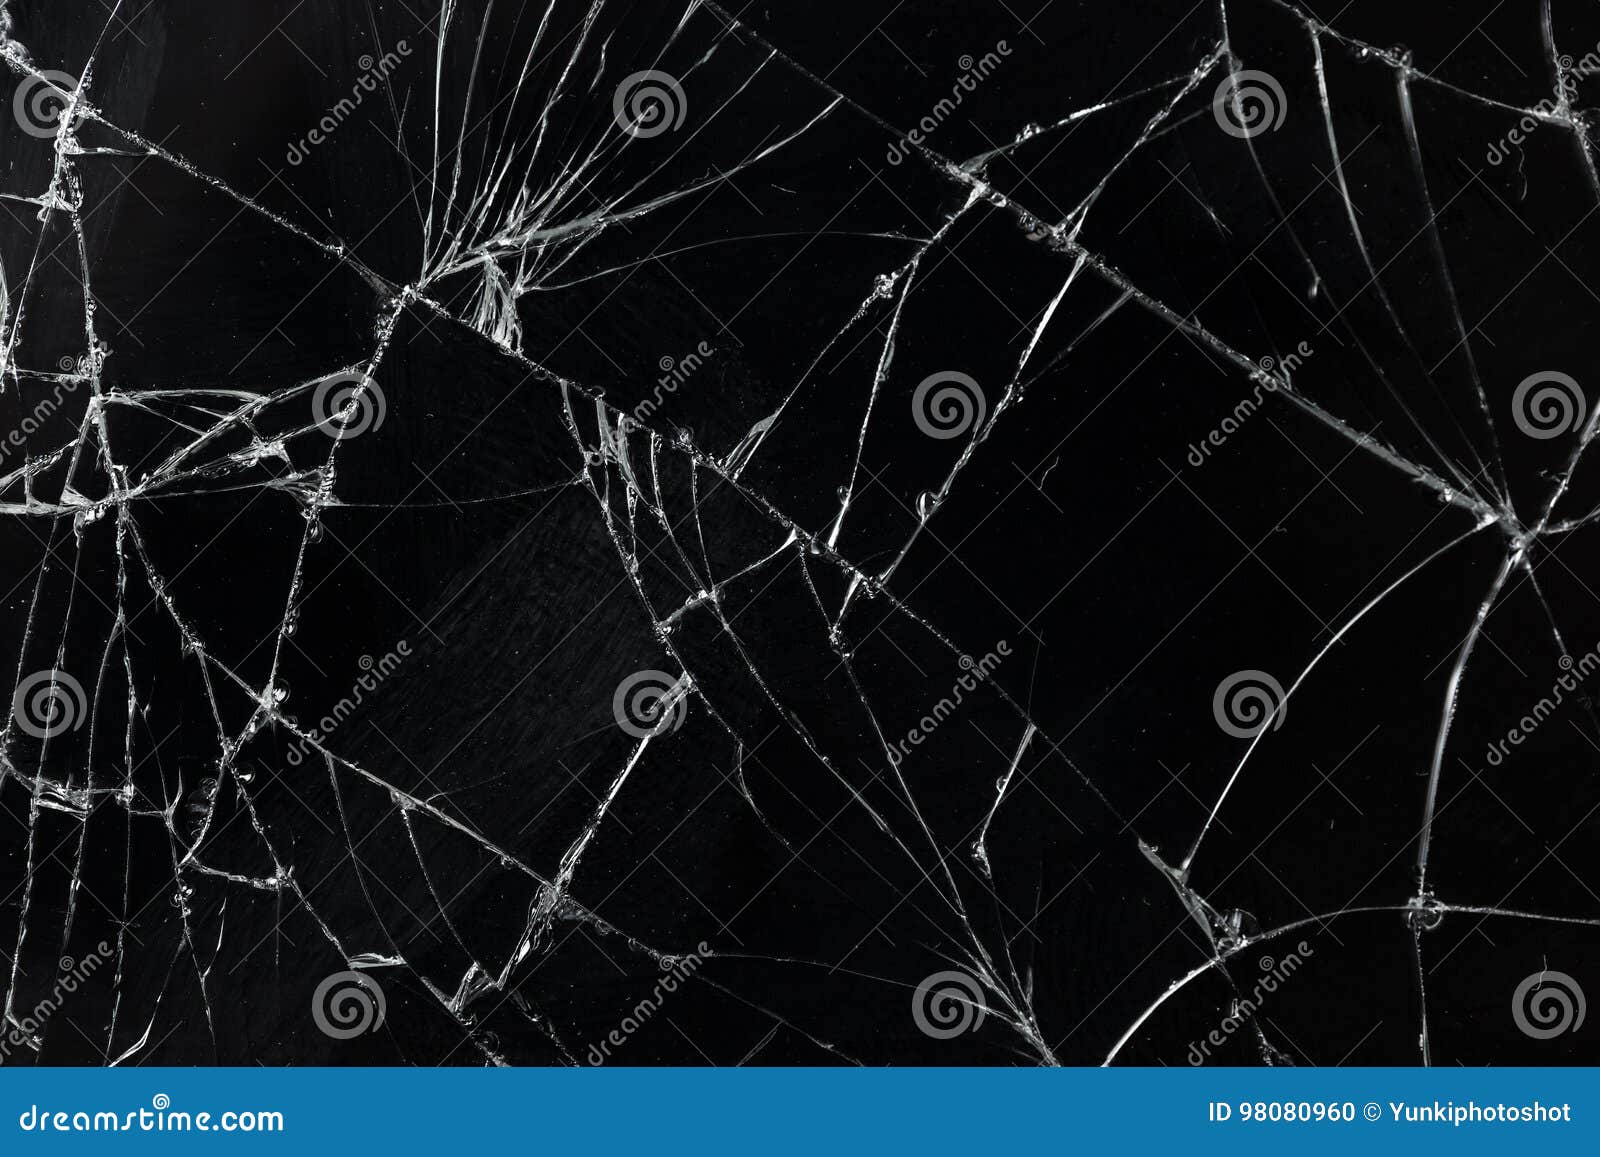 top view cracked broken mobile screen glass texture background.